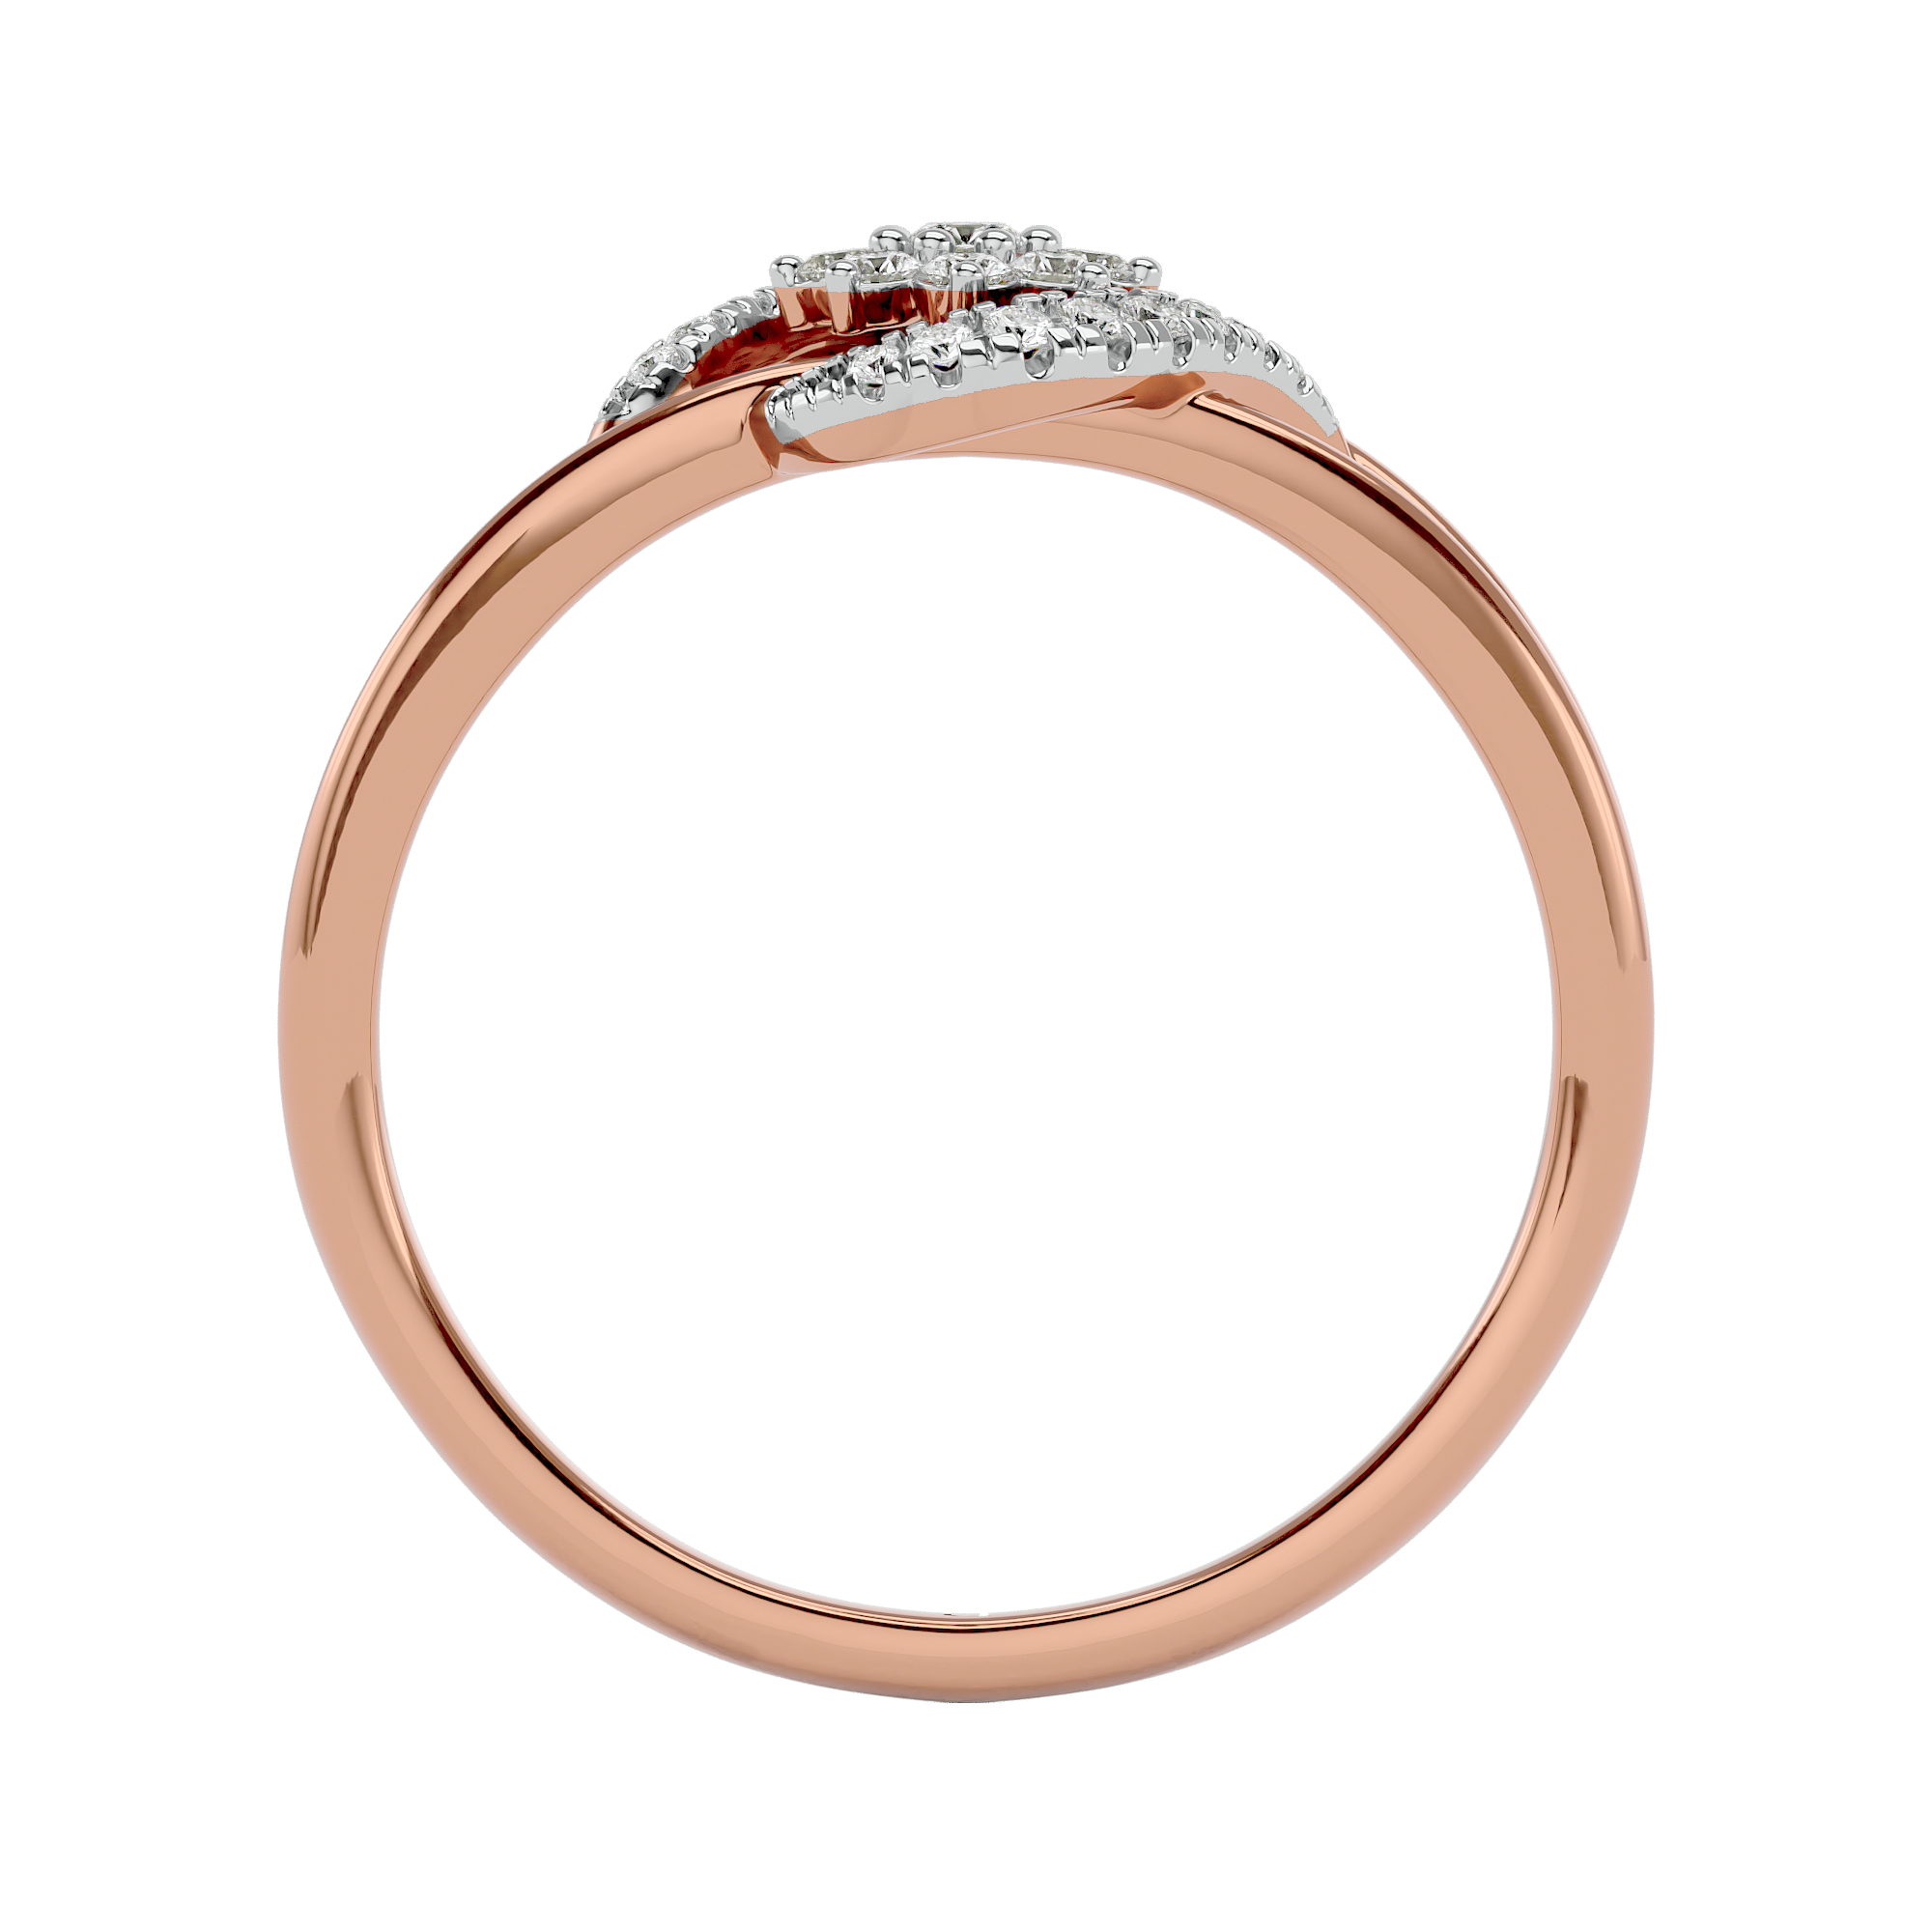 0.17 Carat Diamond Ring in Rose Gold - Blu Diamonds